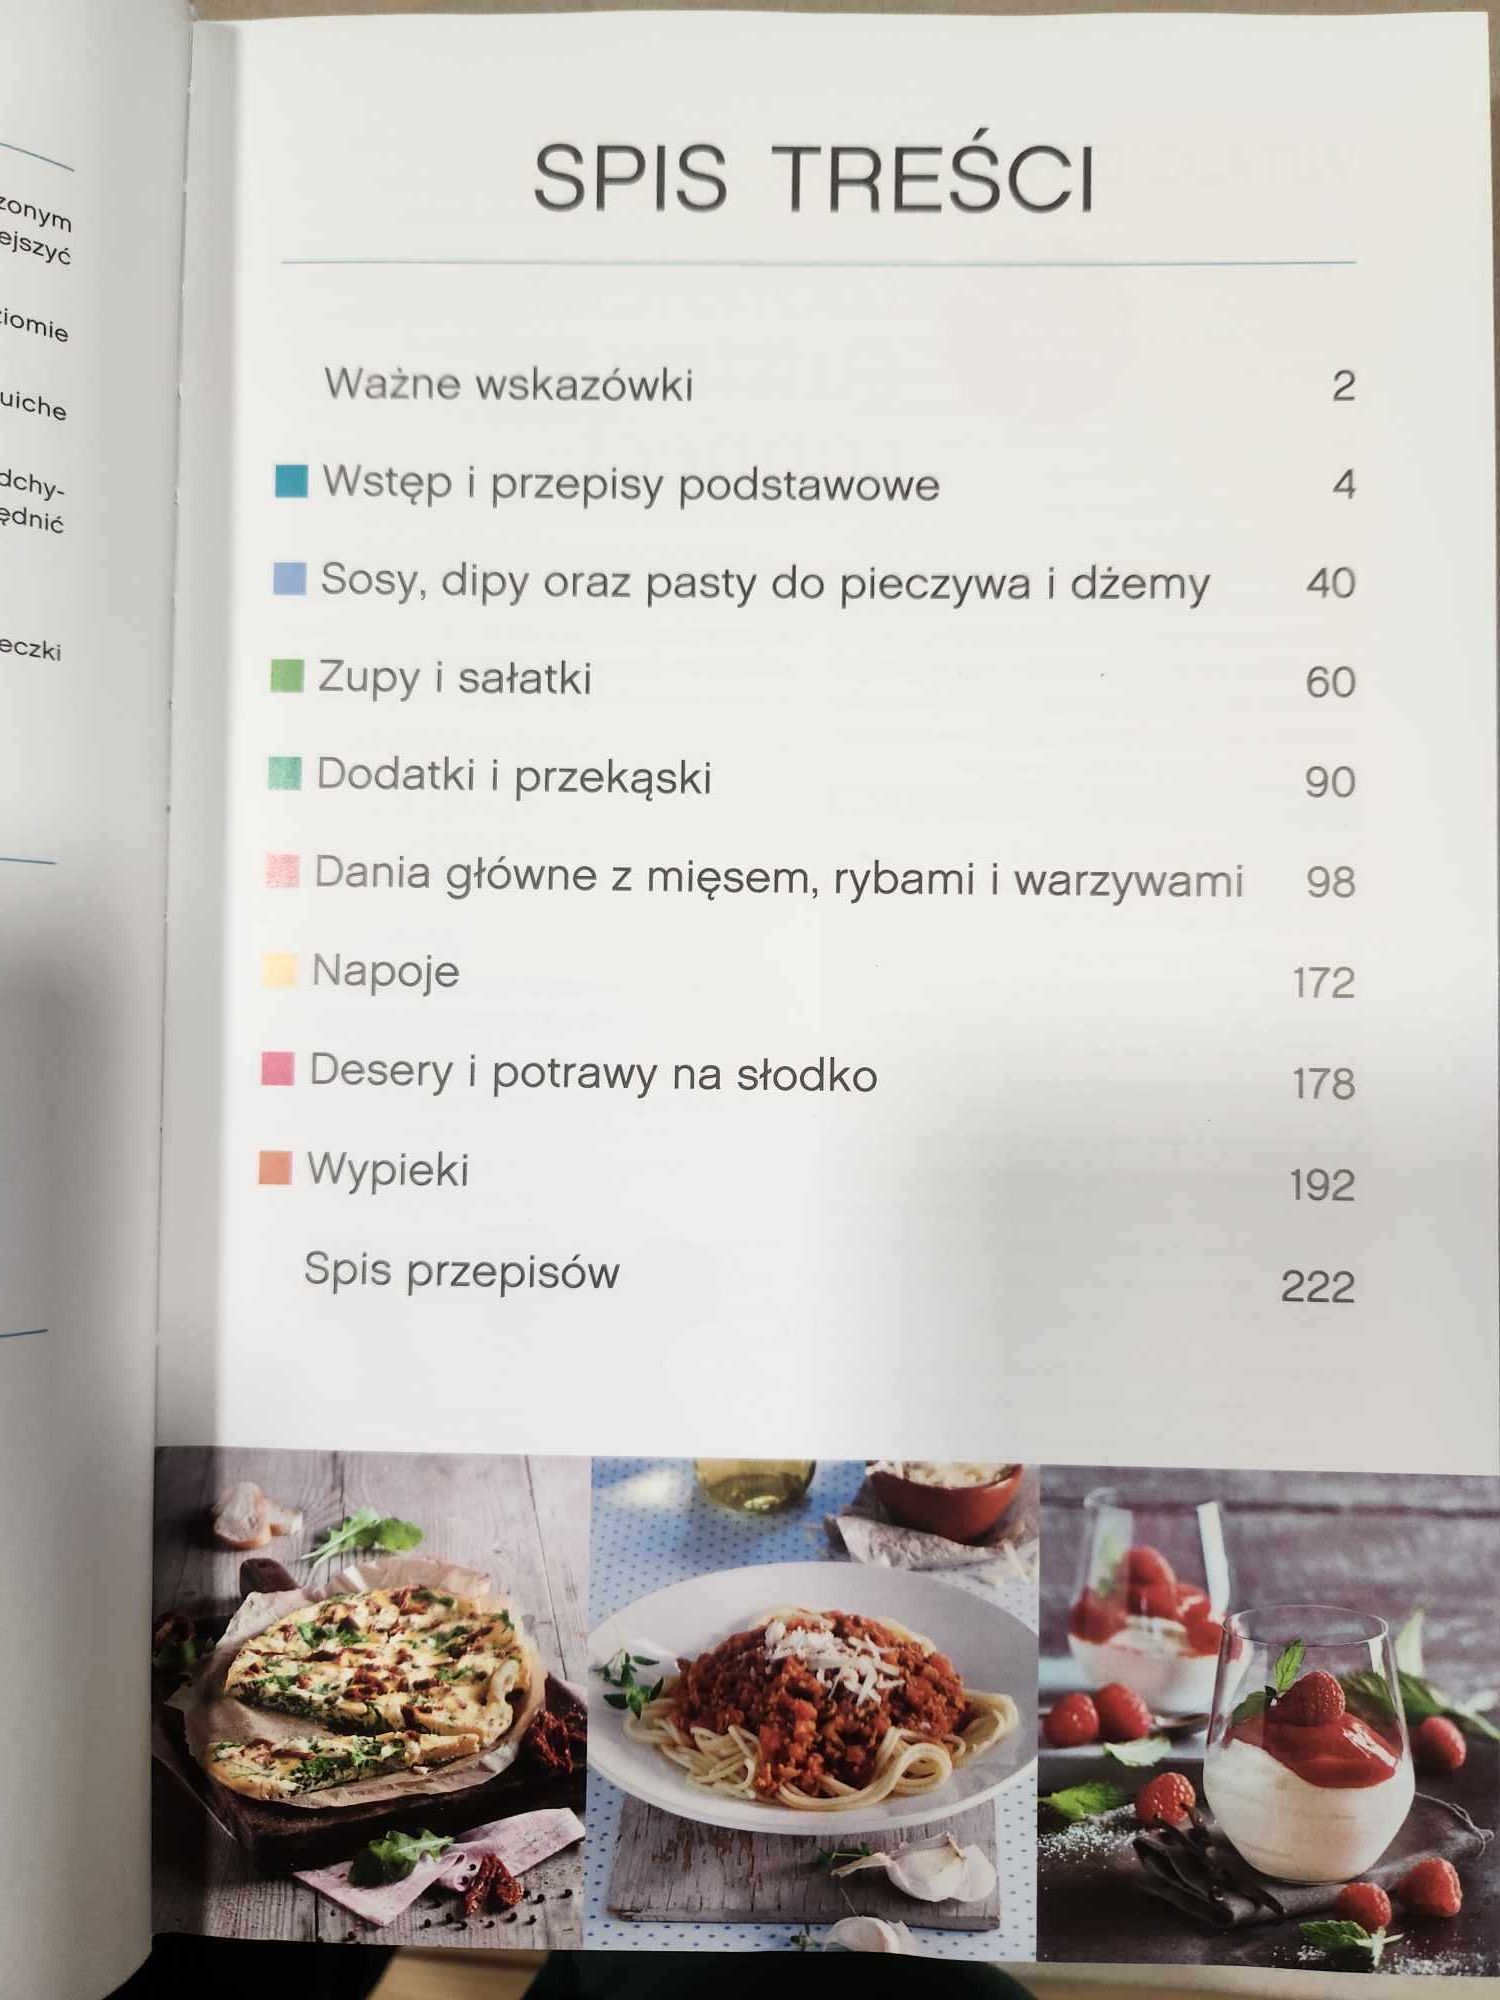 Książka kucharska z robotem kuchennym monsieur cuisine LIDL 2020